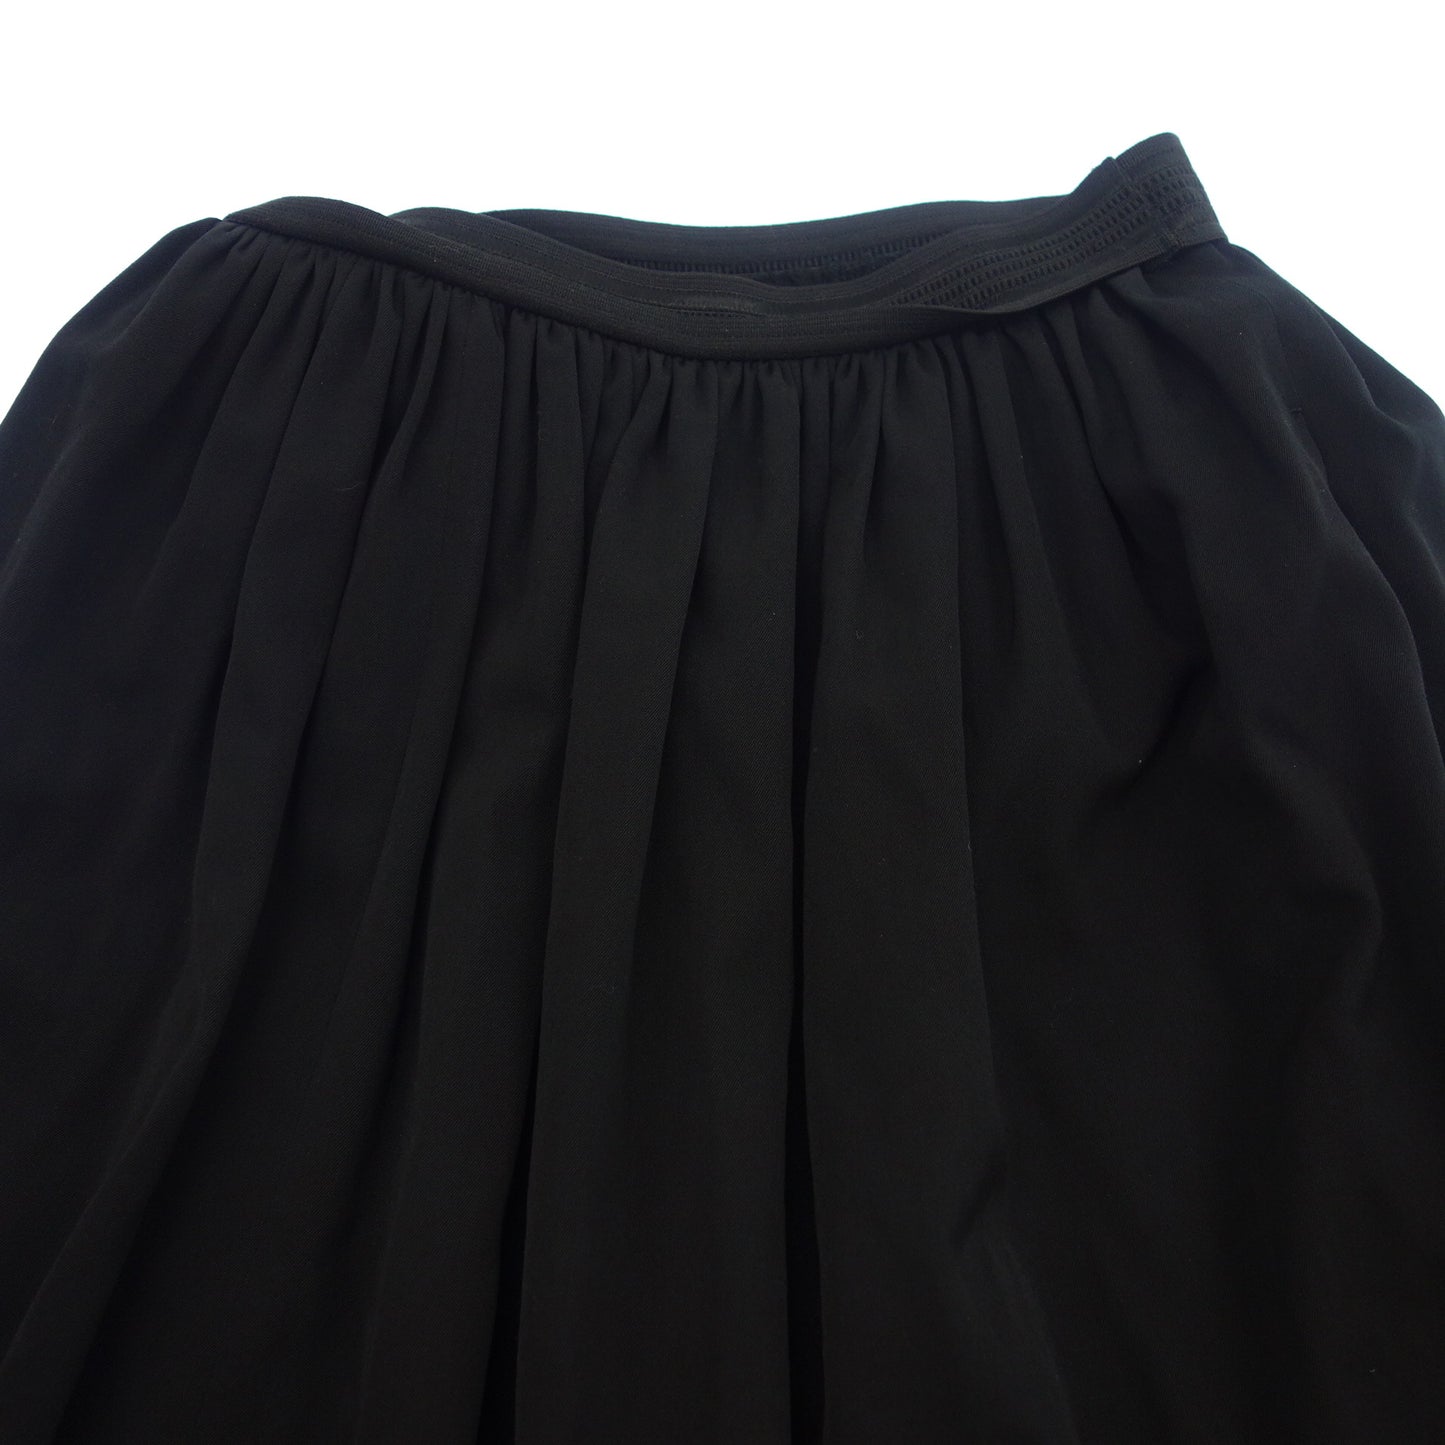 状况非常好 ◆ Yohji Yamamoto 裙子羊毛尼龙切换女式黑色 1 Yohji Yamamoto [AFB49] 